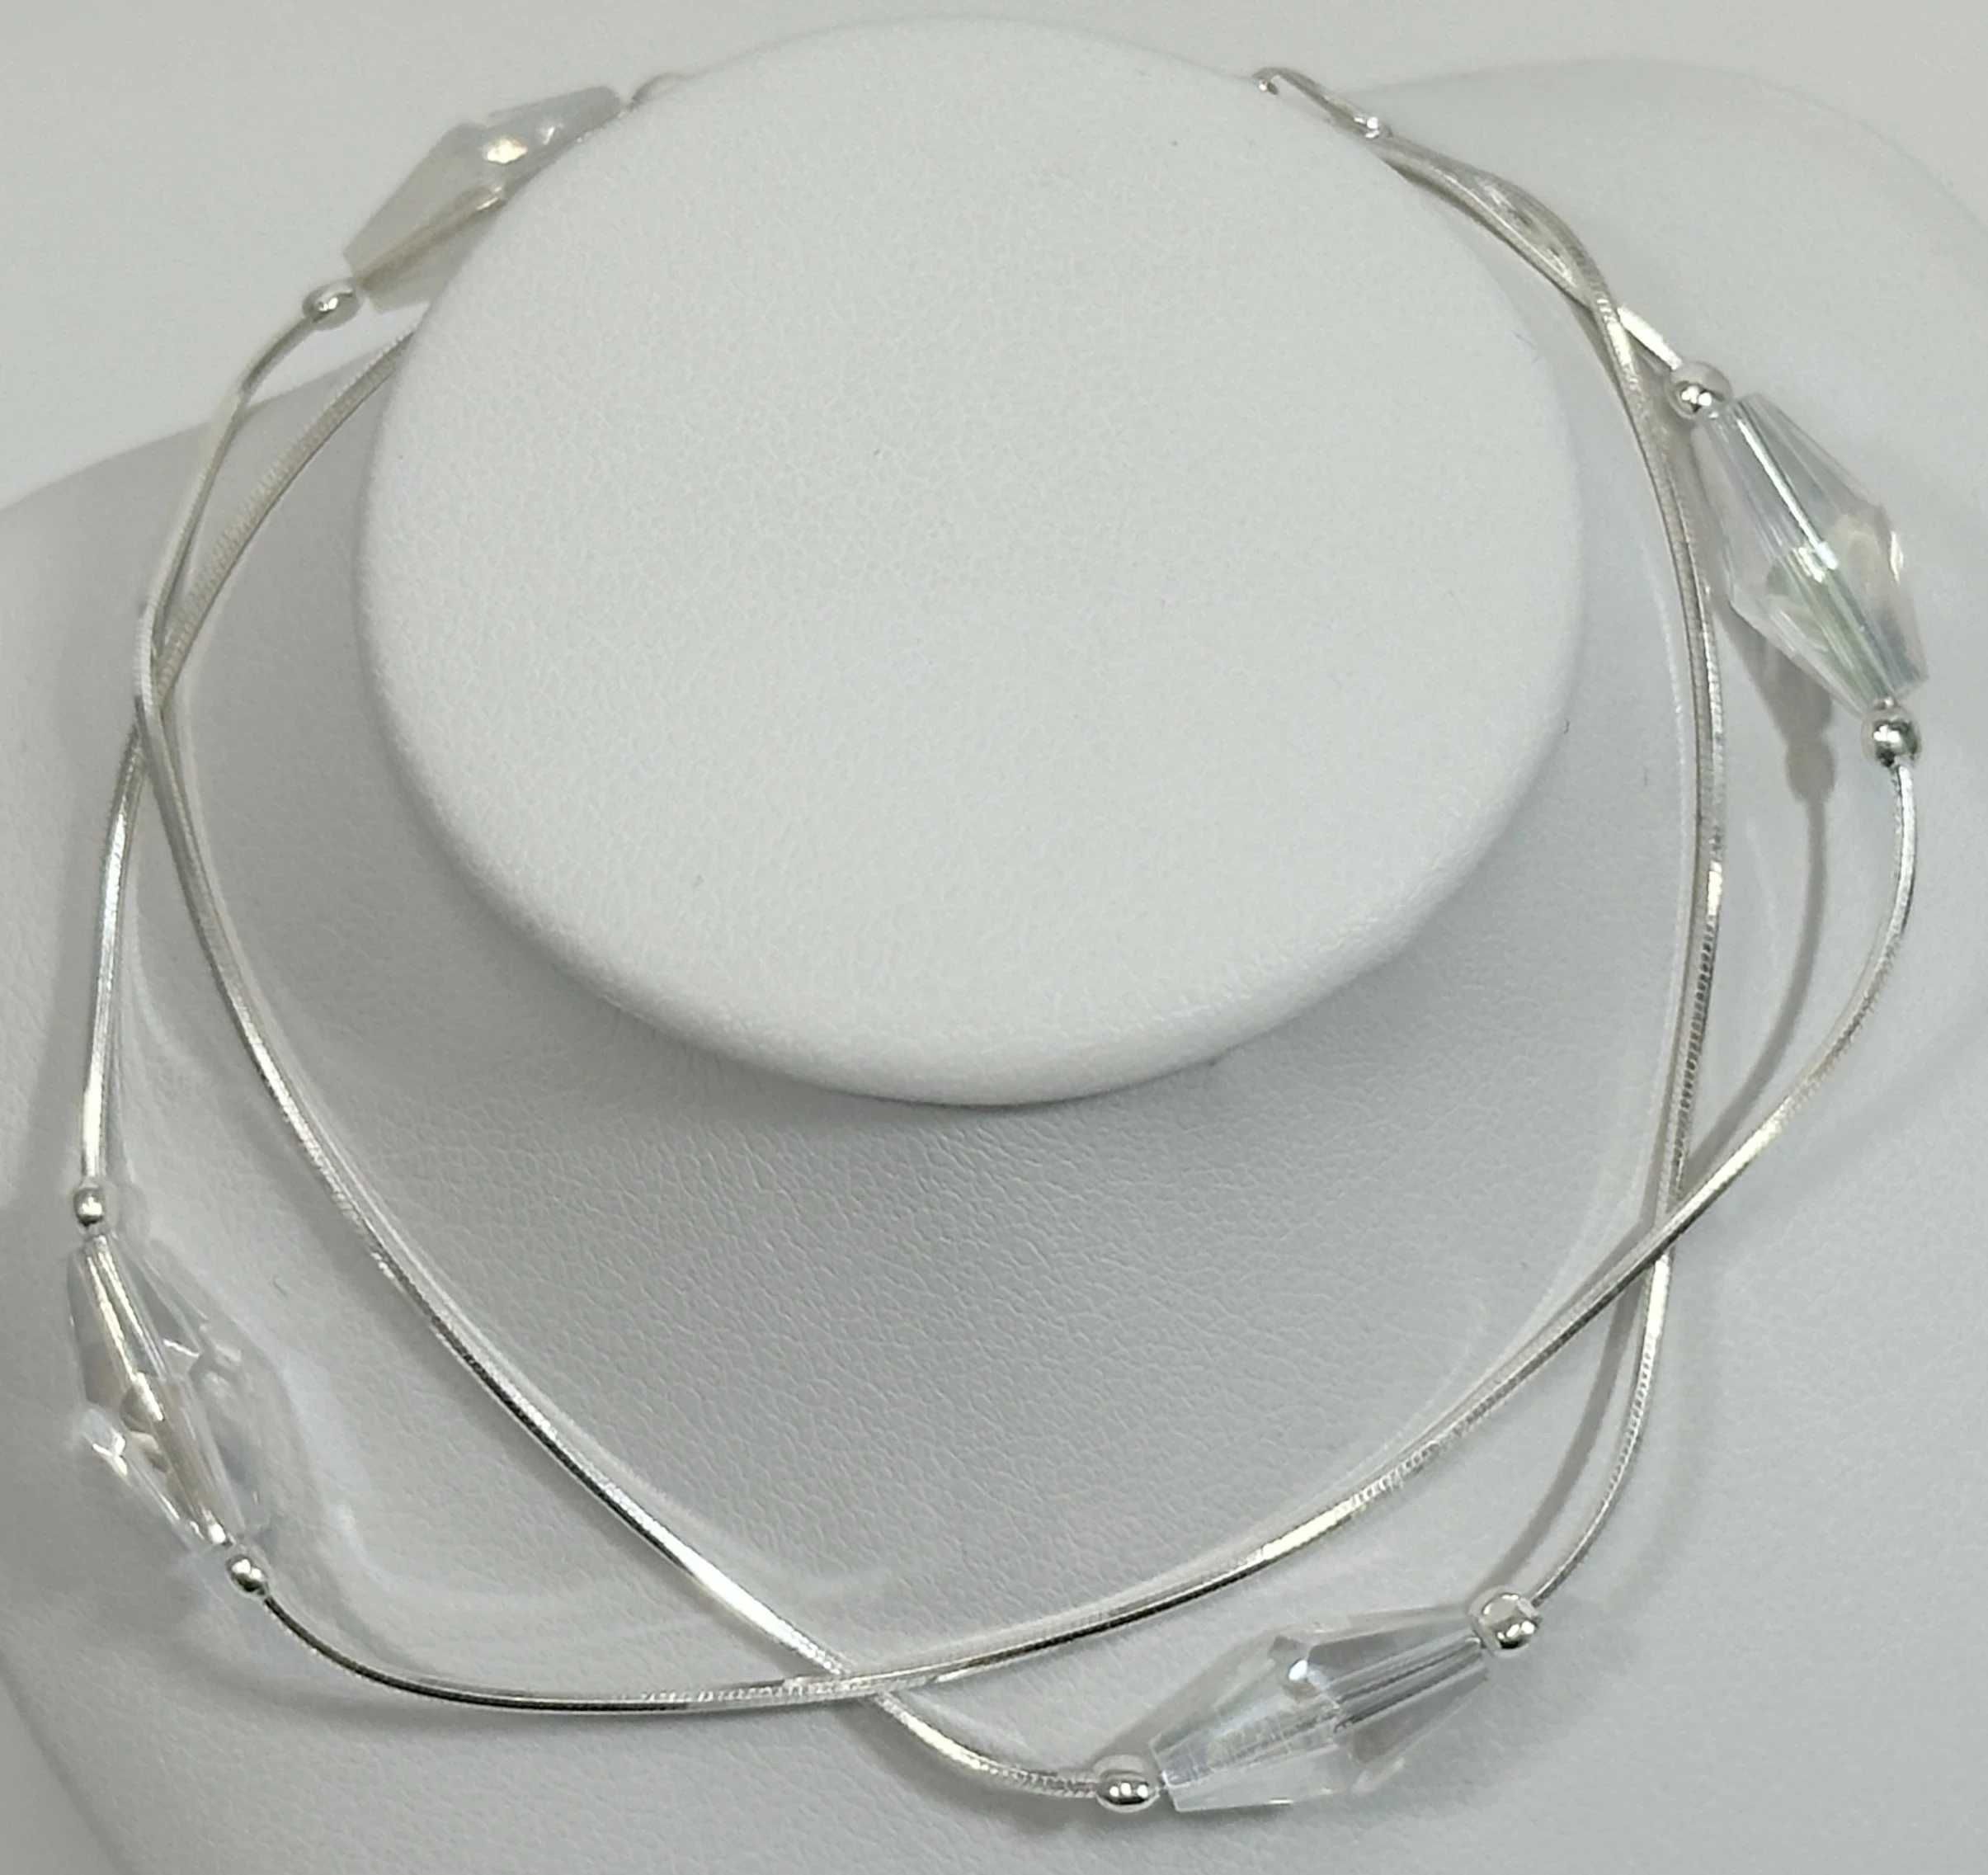 Piękna delikatna srebrna bransoletka z kryształkami 4,1G 925